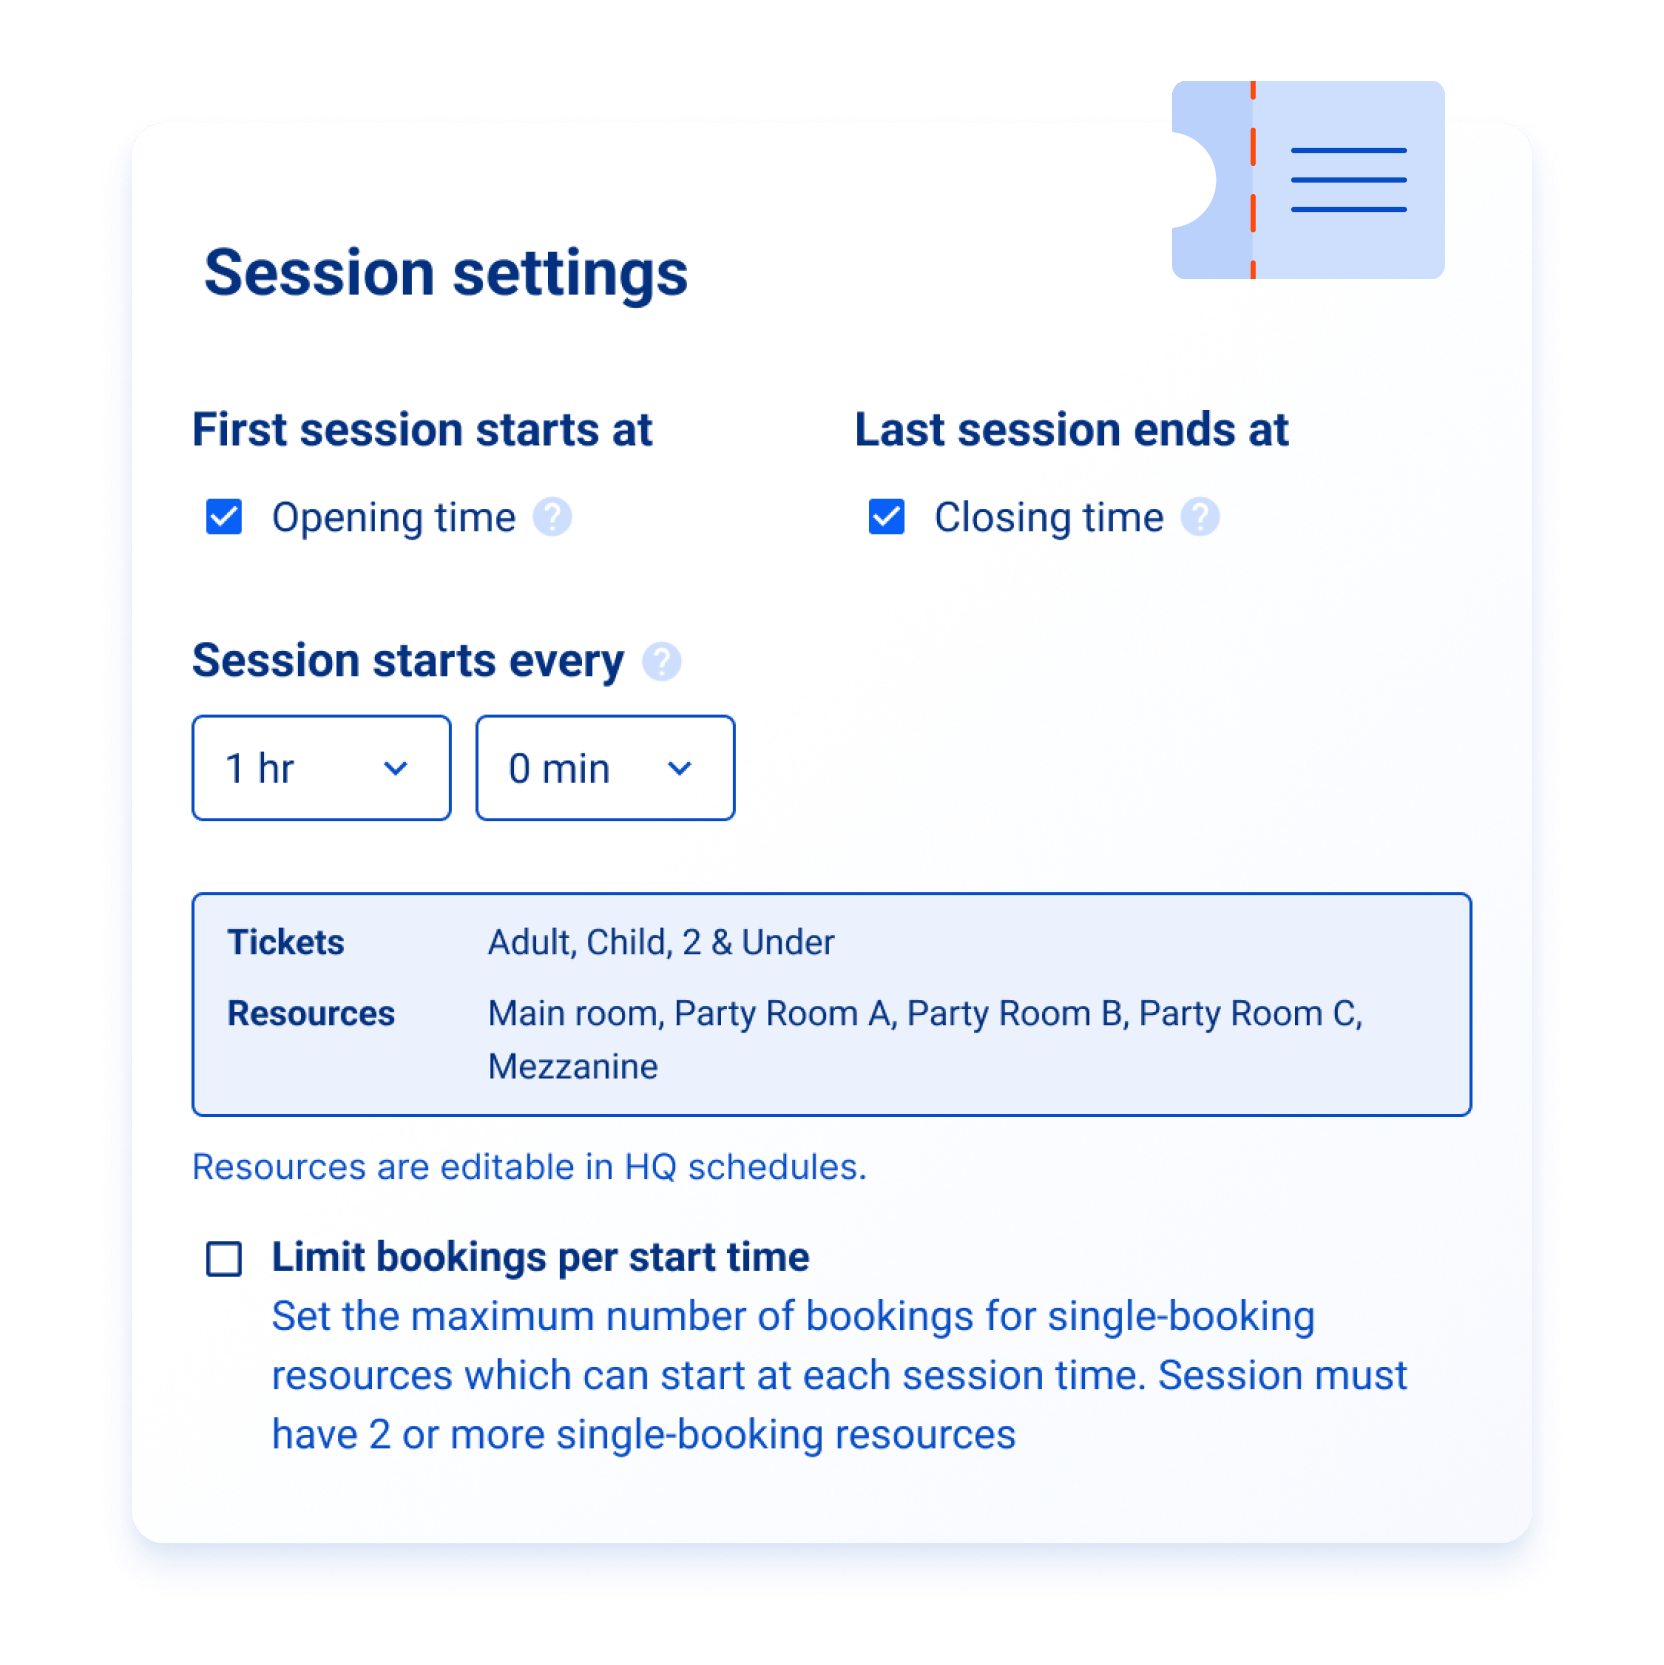 Session settings